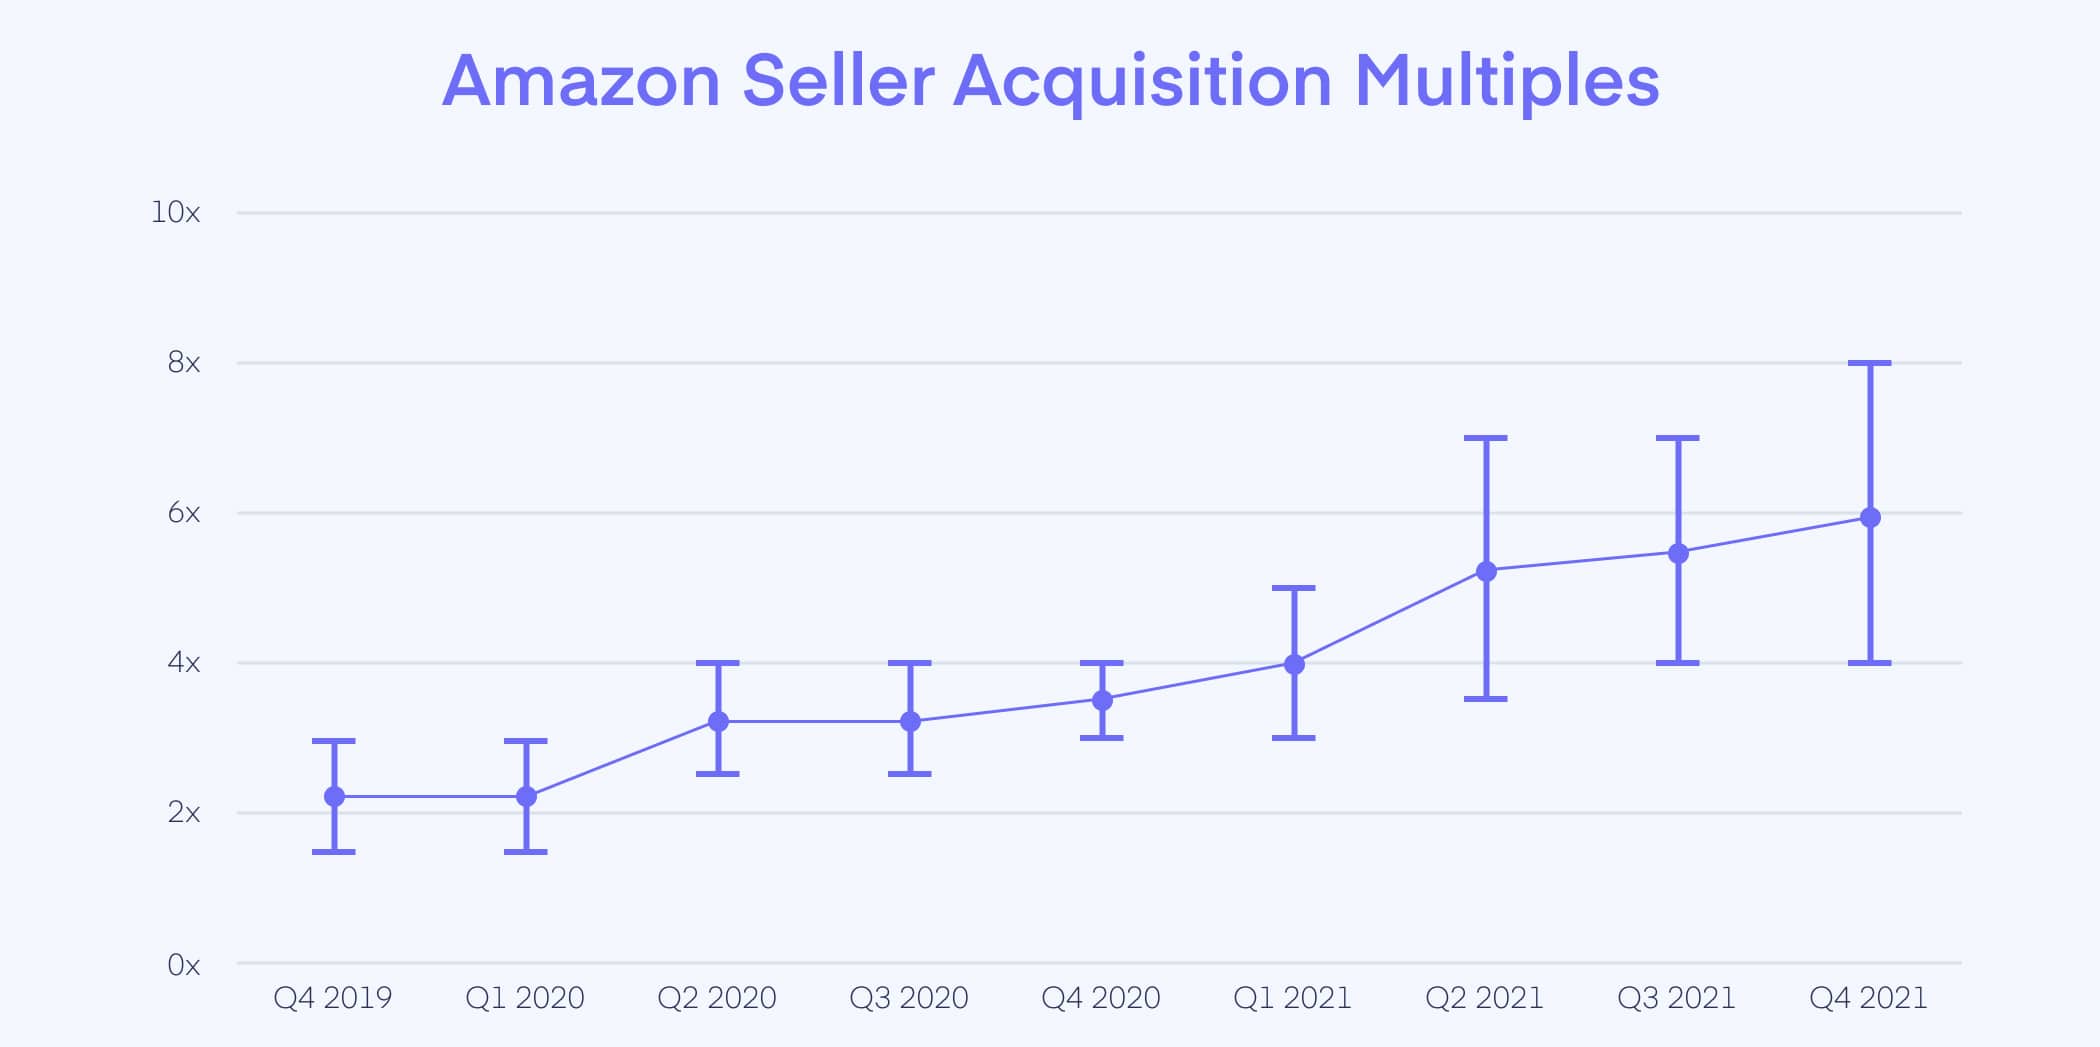 Amazon Seller Acquisition multiples